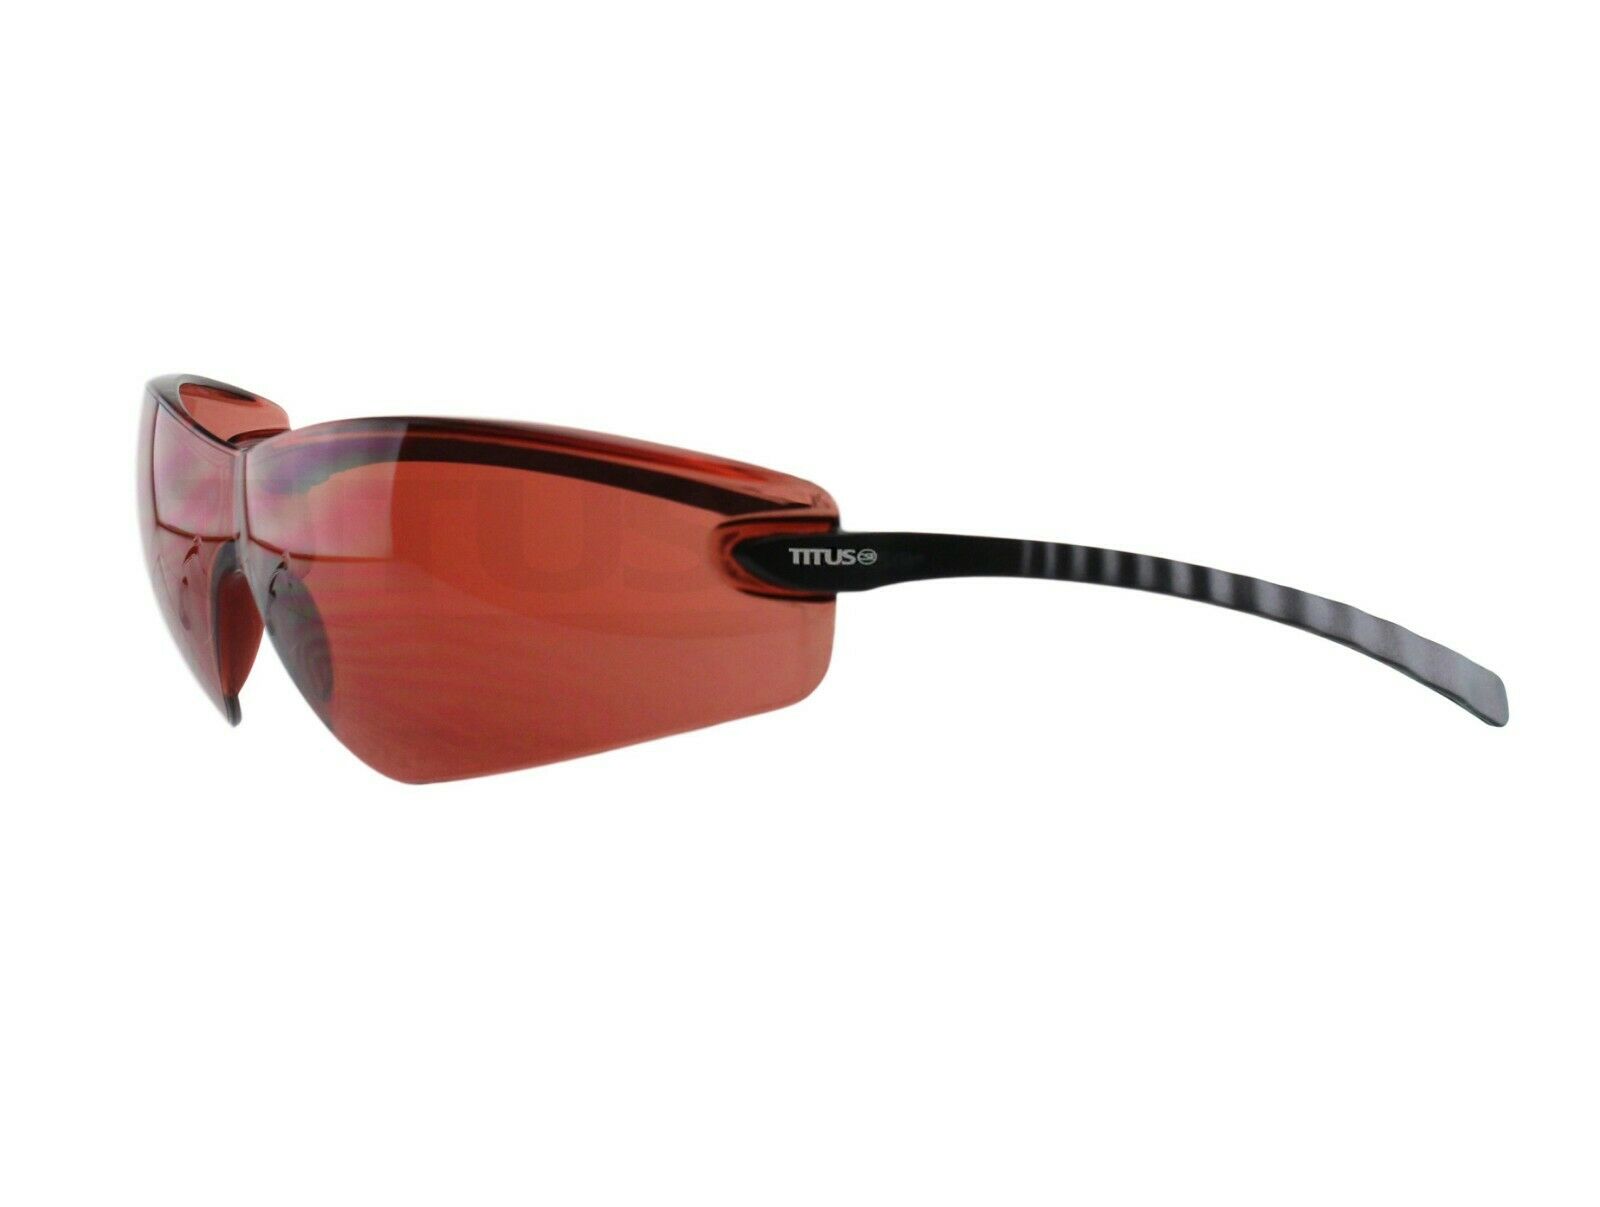 Titus G23 Memory Stem Safety Glasses Shooting Motorcycle Eye Protection Ansi Z87